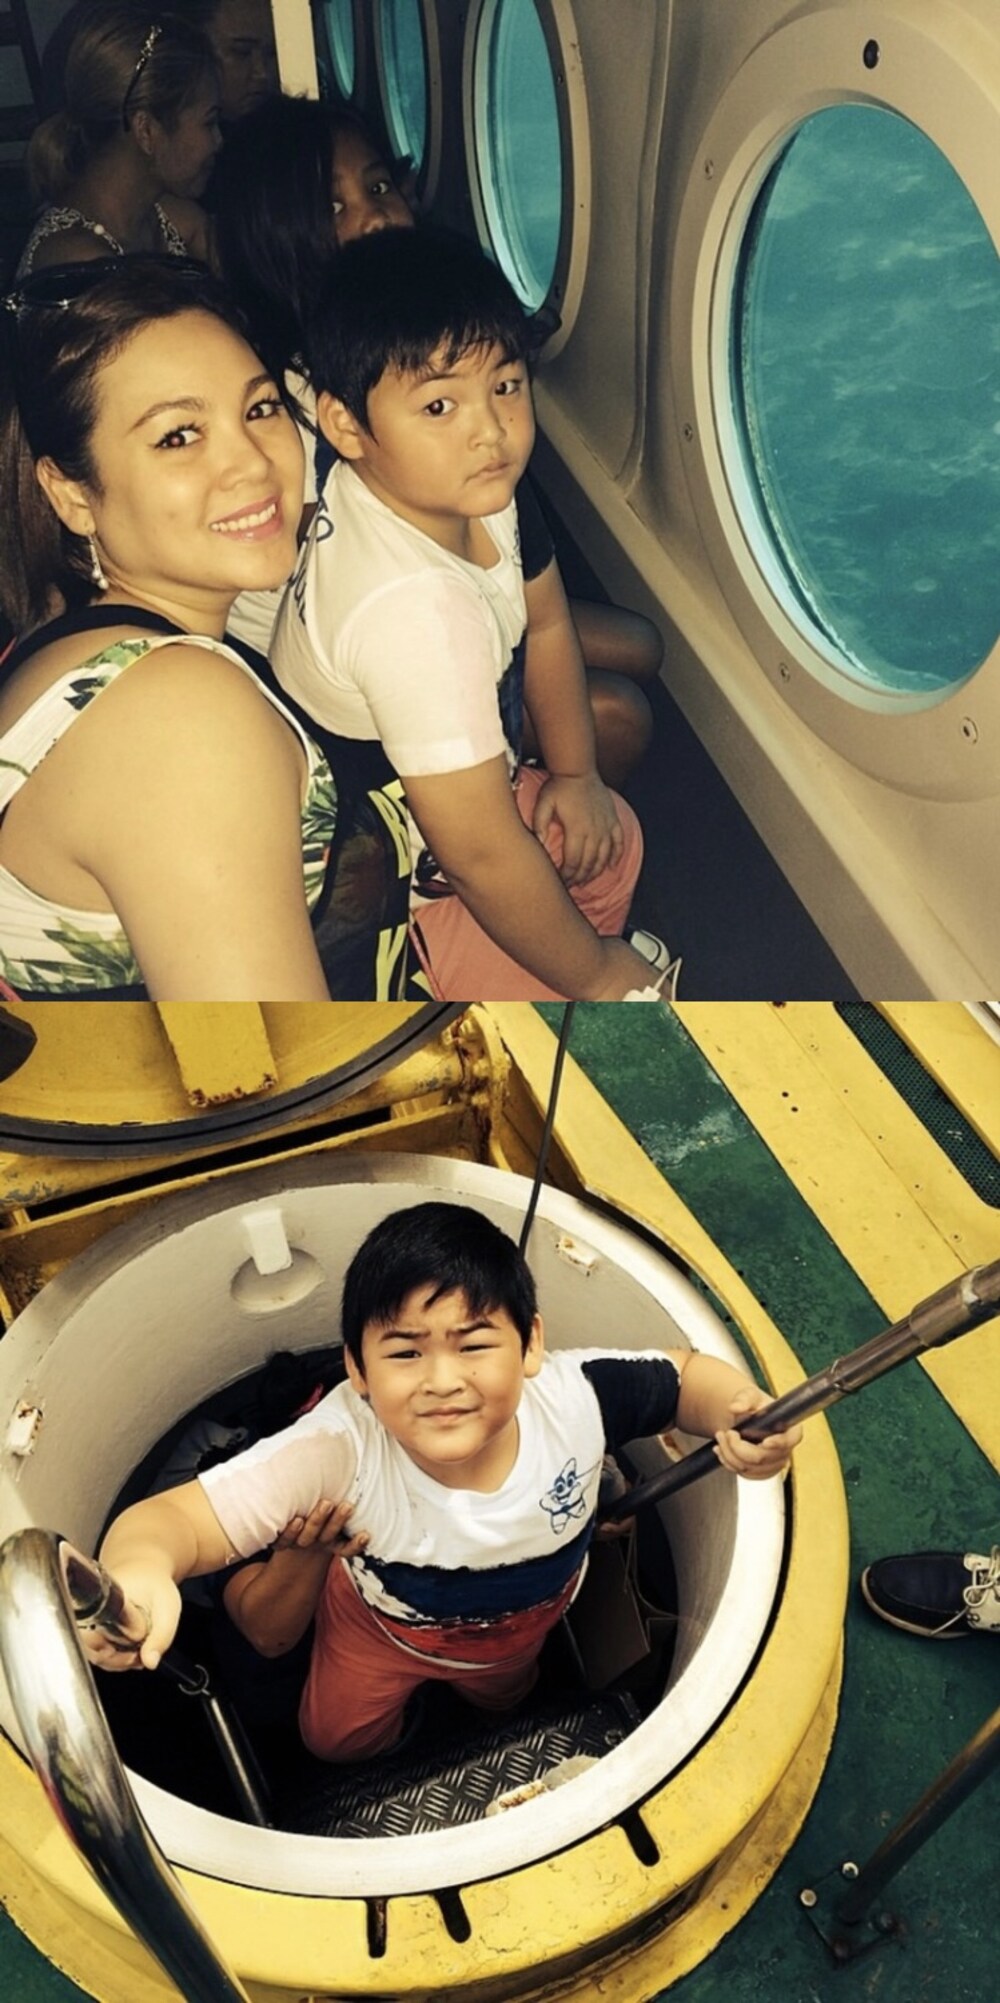 Santino Santiago aboard the yellow submarine